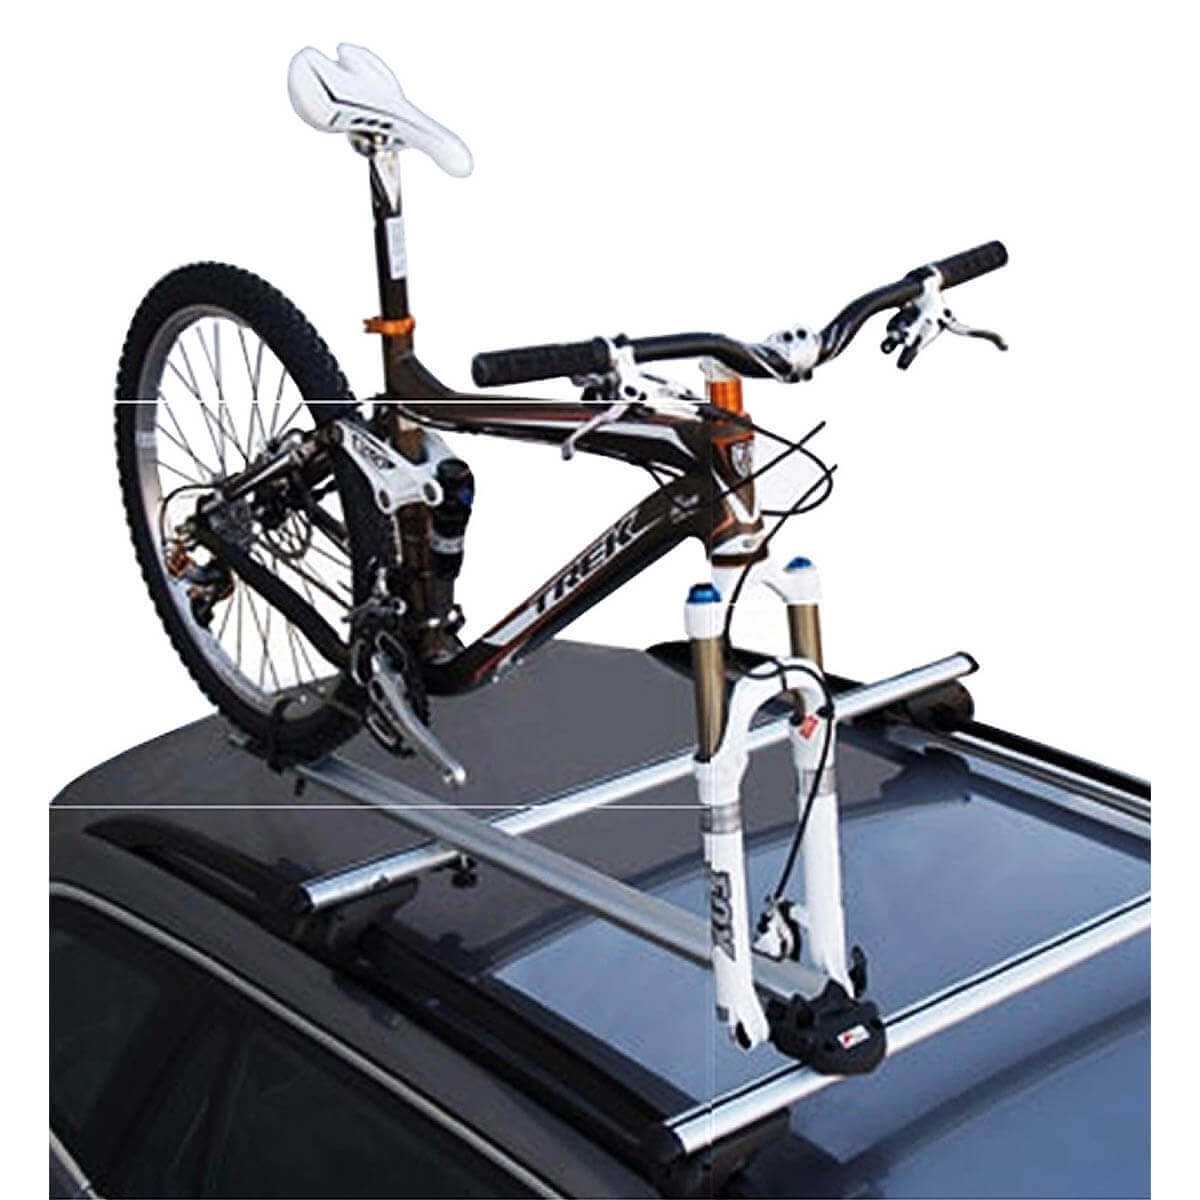 Rack de teto para bicicleta transbike Kiussi Etna anodizado tirando a roda dianteira